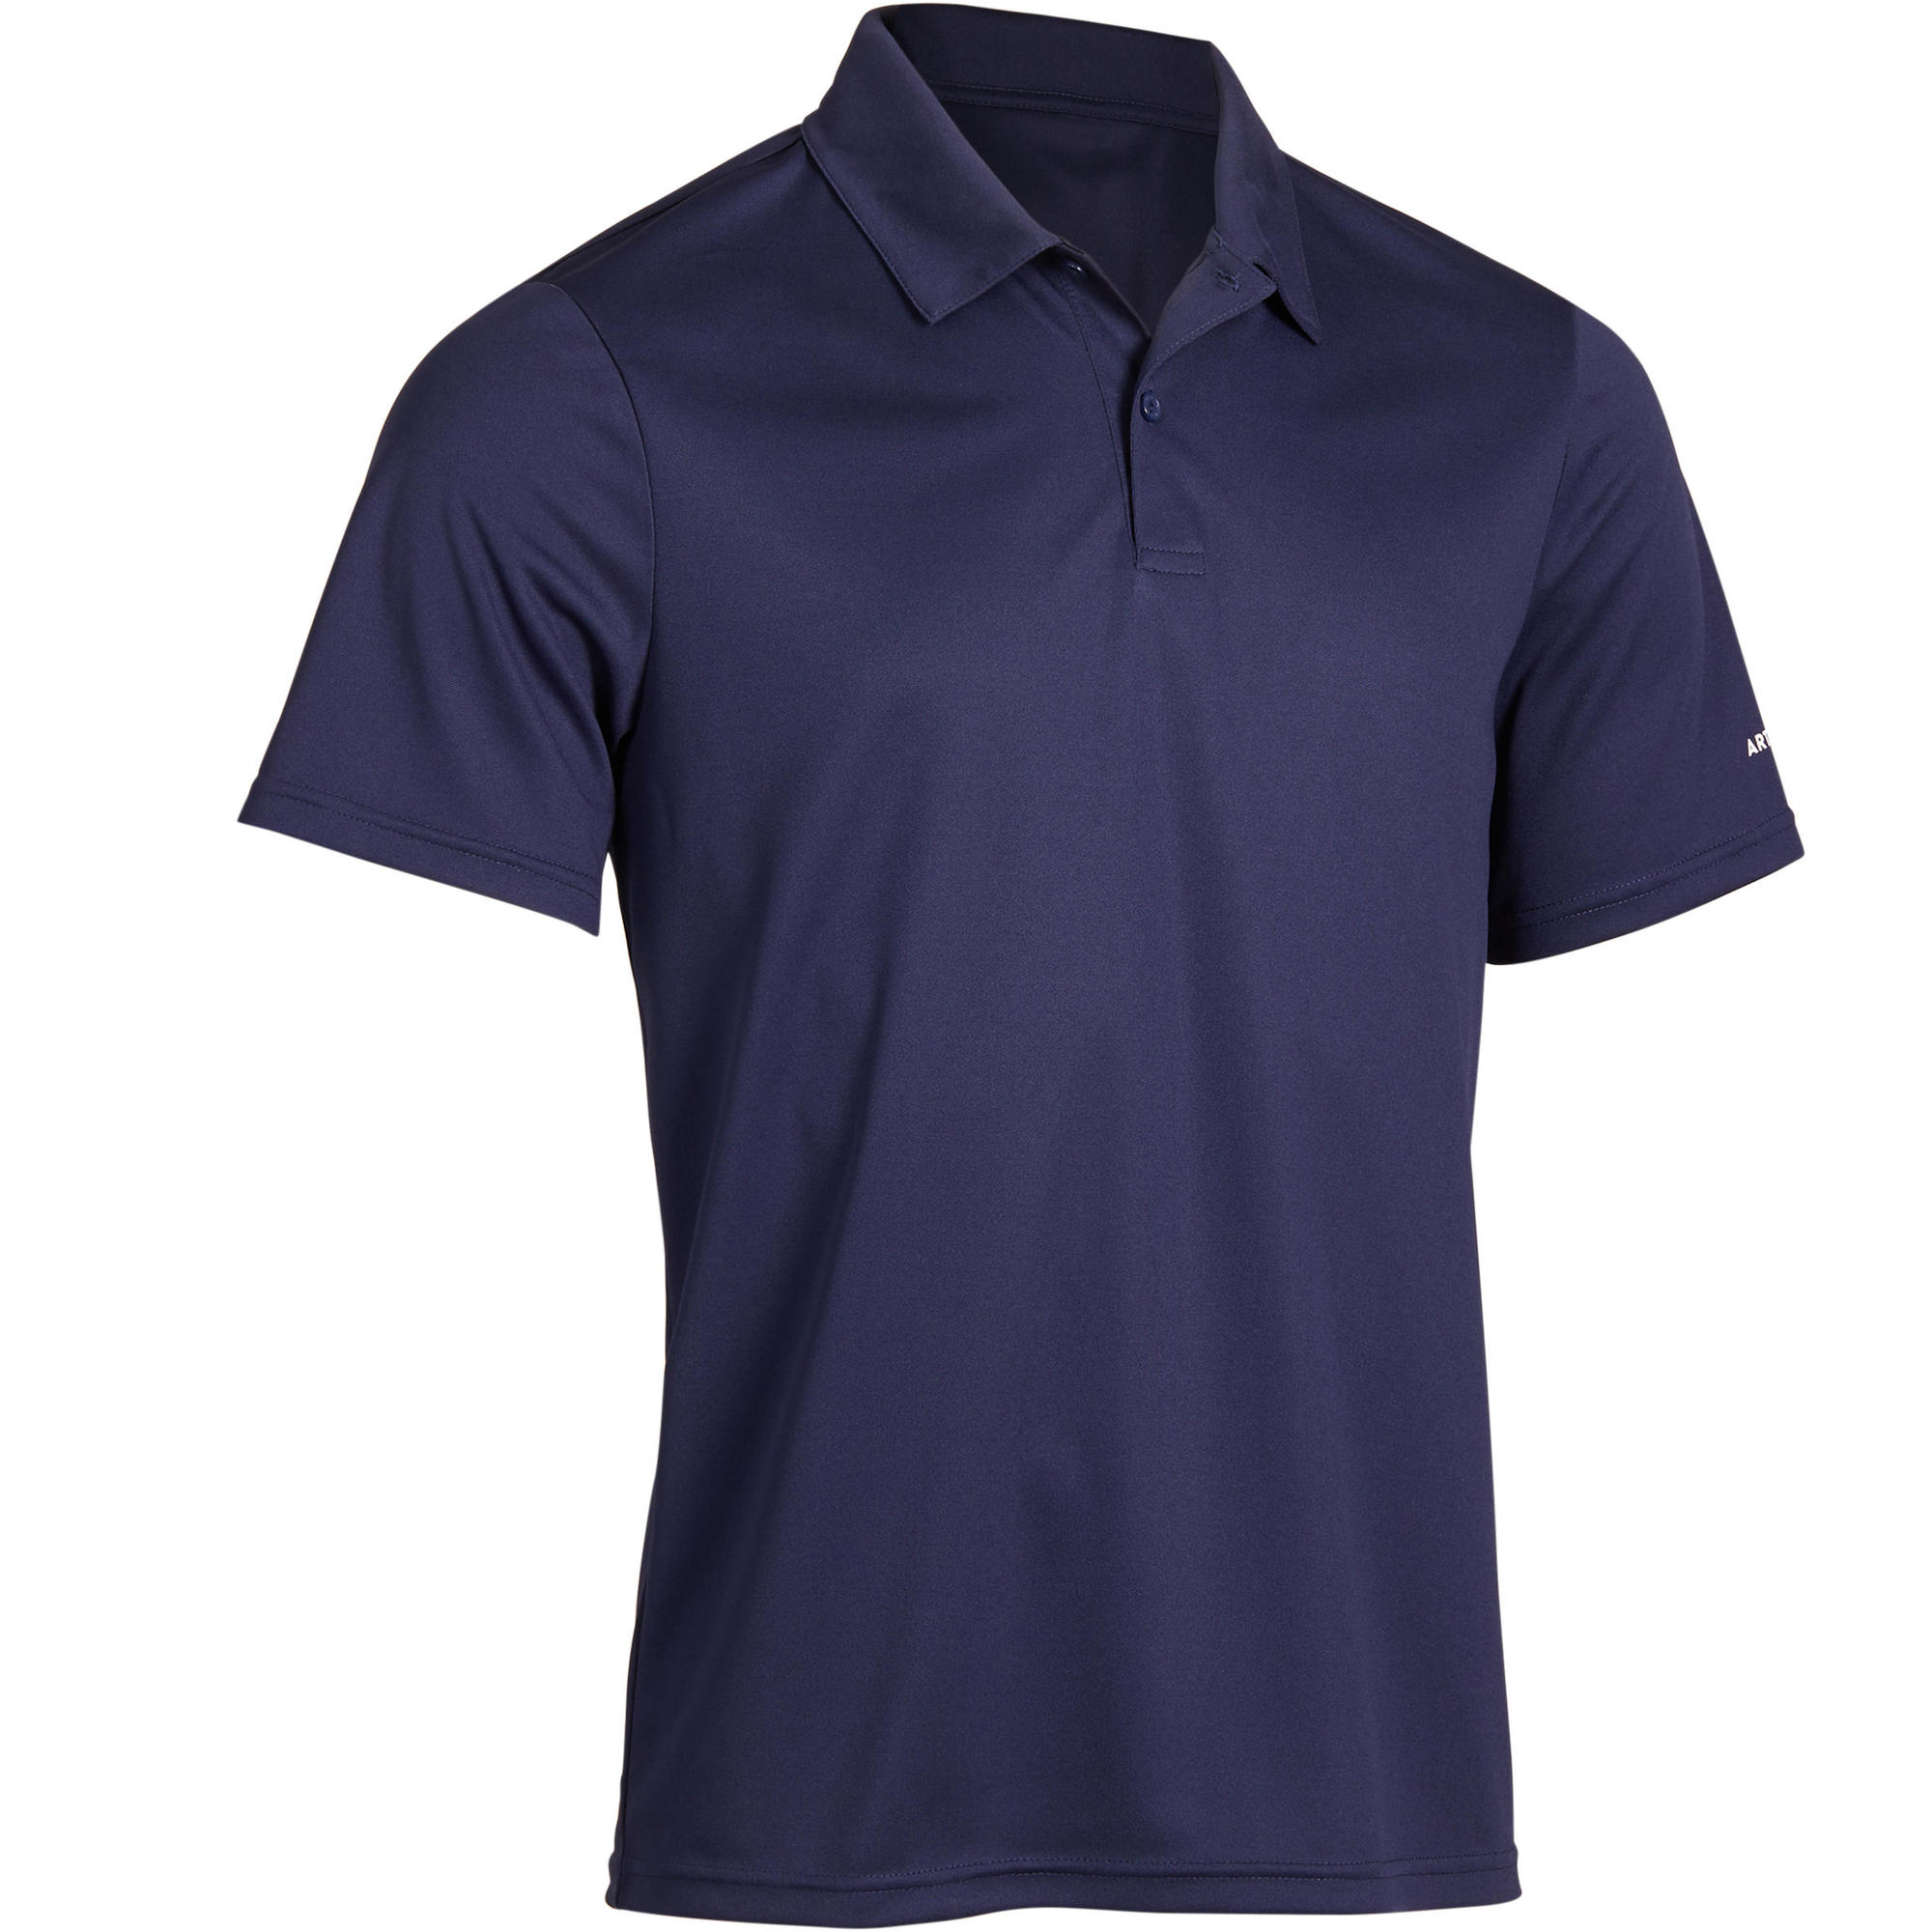 Dry 100 Tennis Polo Shirt - Navy | artengo